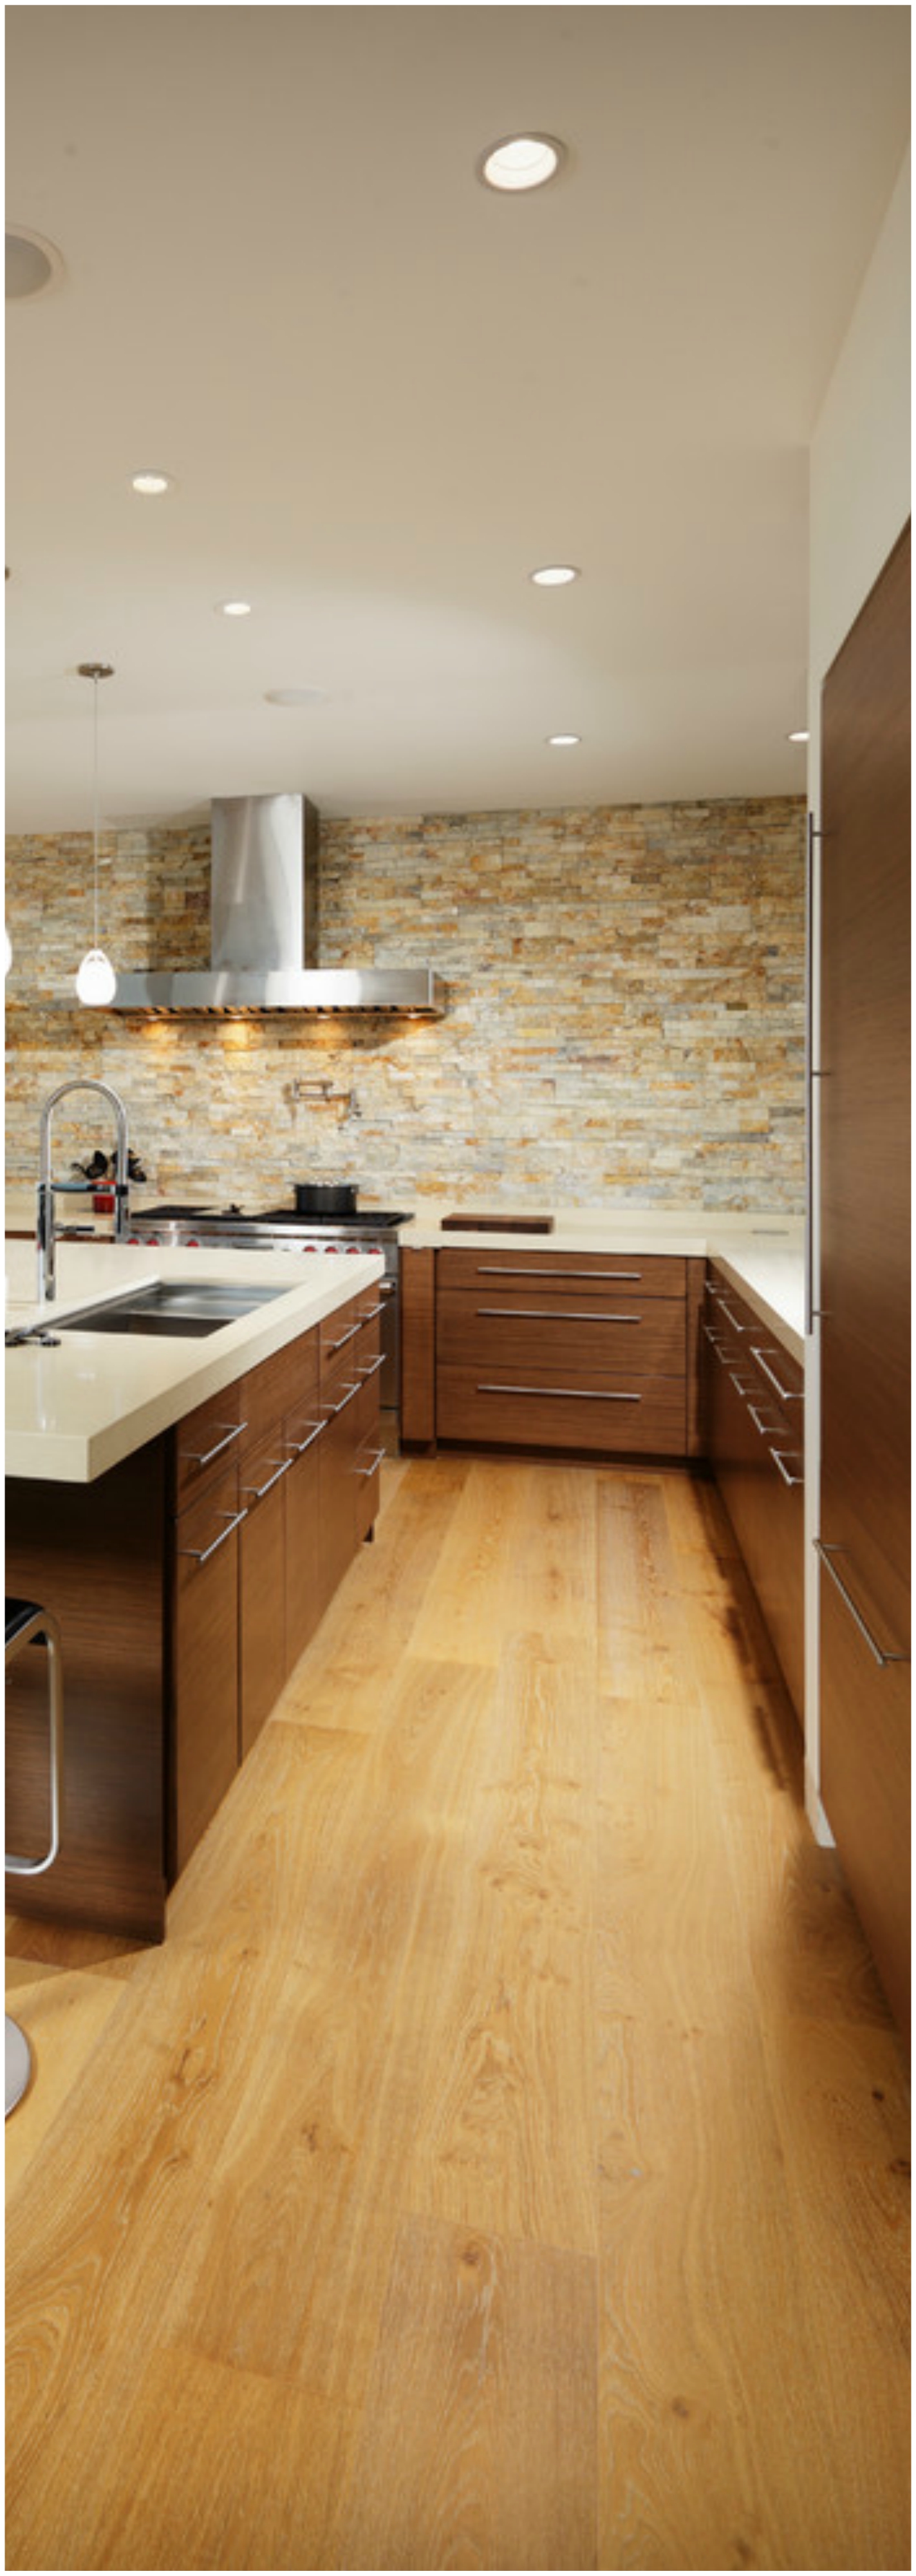 U-shaped Light Wood Floor Kitchen With Dark Wood Cabinets